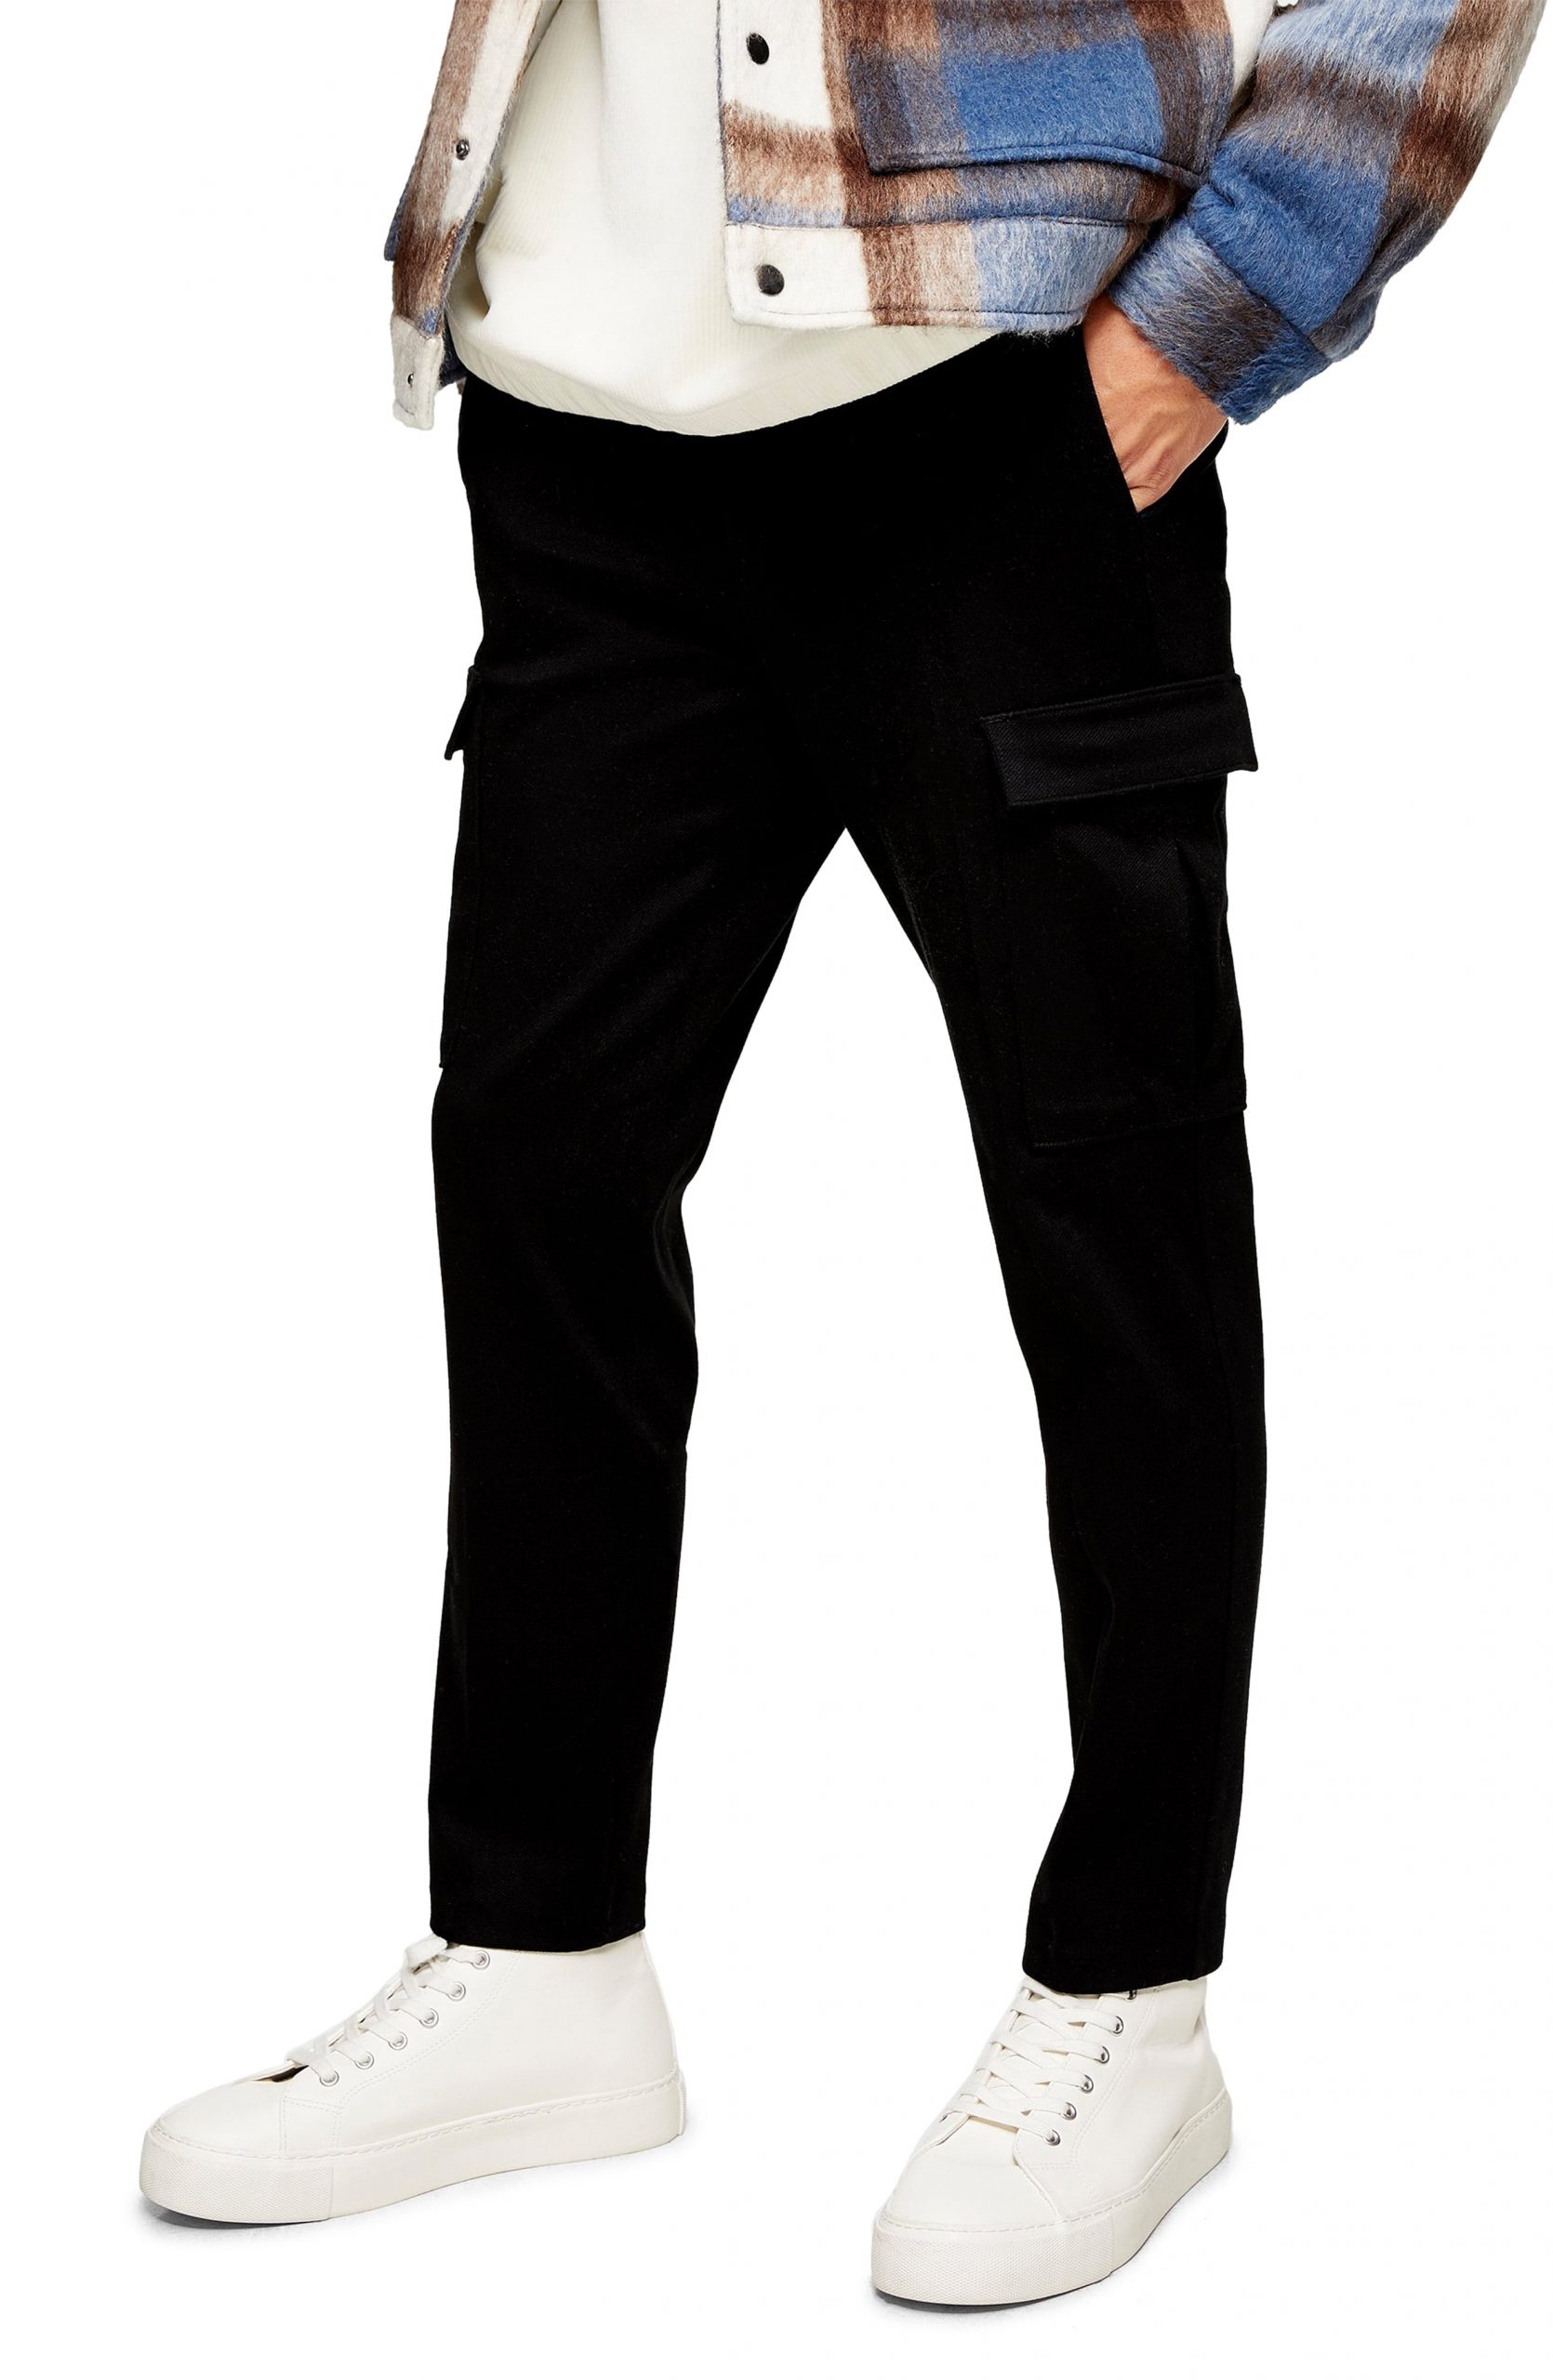 Men’s Topman Ponte Cargo Pants, Size 28 x 32 - Black | The Fashionisto